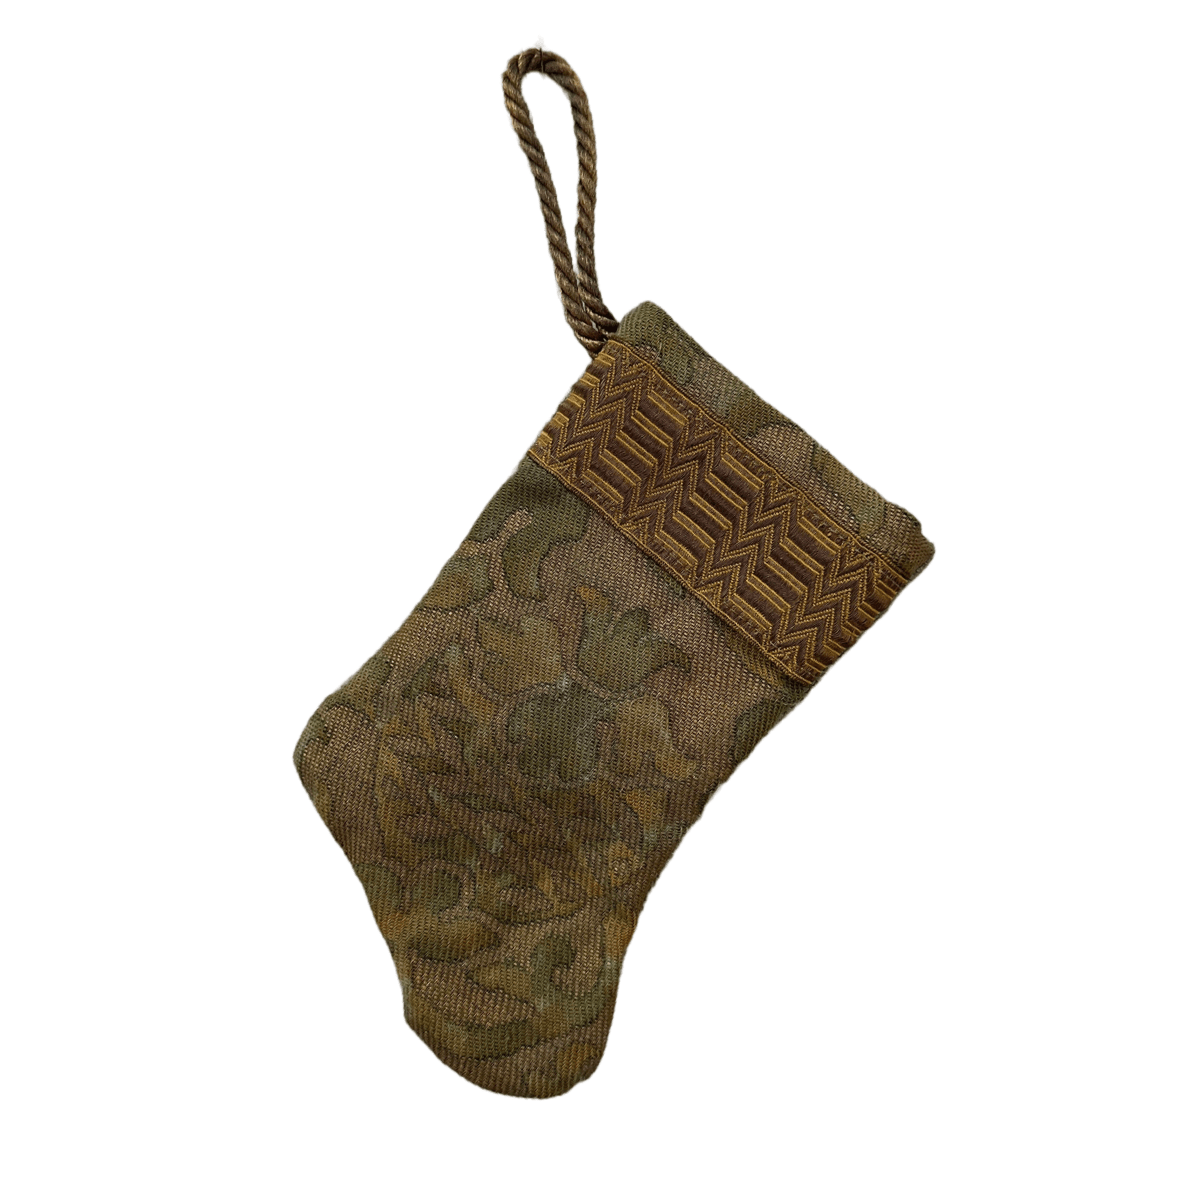 Handmade Mini Stocking Ornament from Antique & Vintage Textiles, Trims | Green Fortuny Ornament B. Viz Design B 